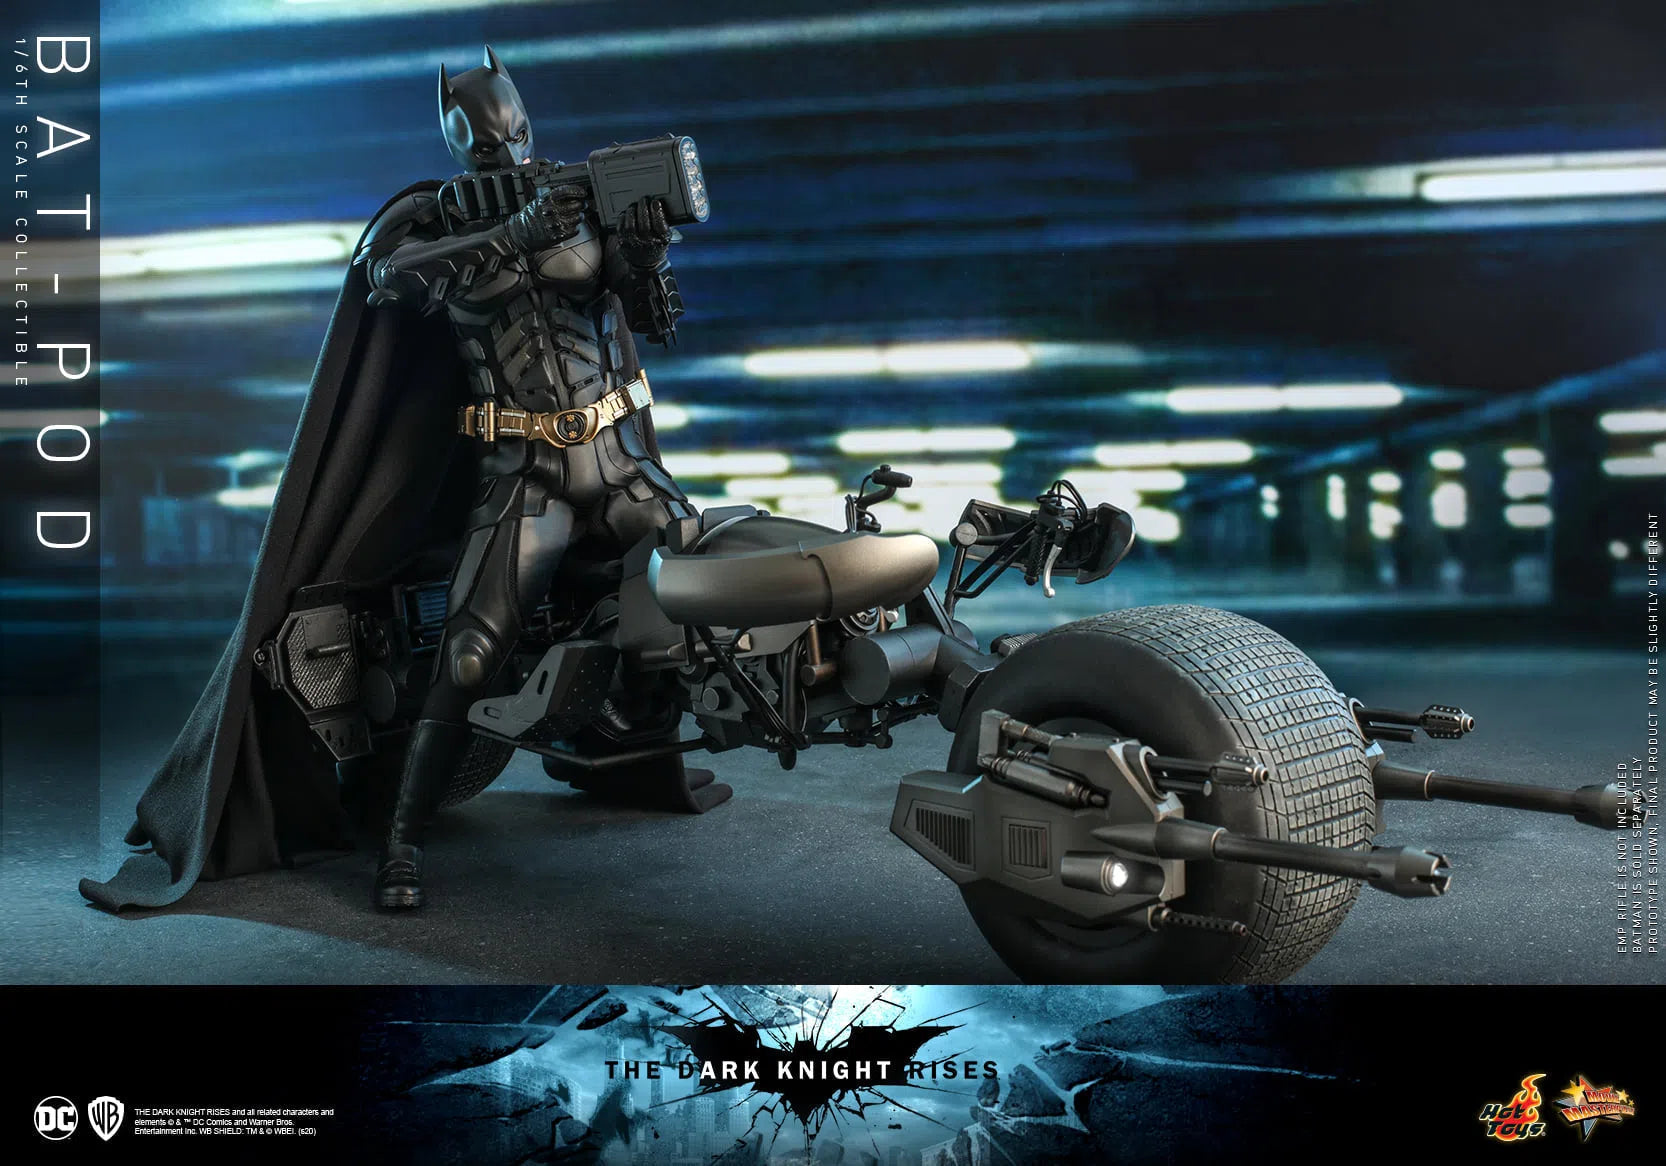 Bat-Pod: The Dark Knight Rises: MMS591: DC Comics Hot Toys